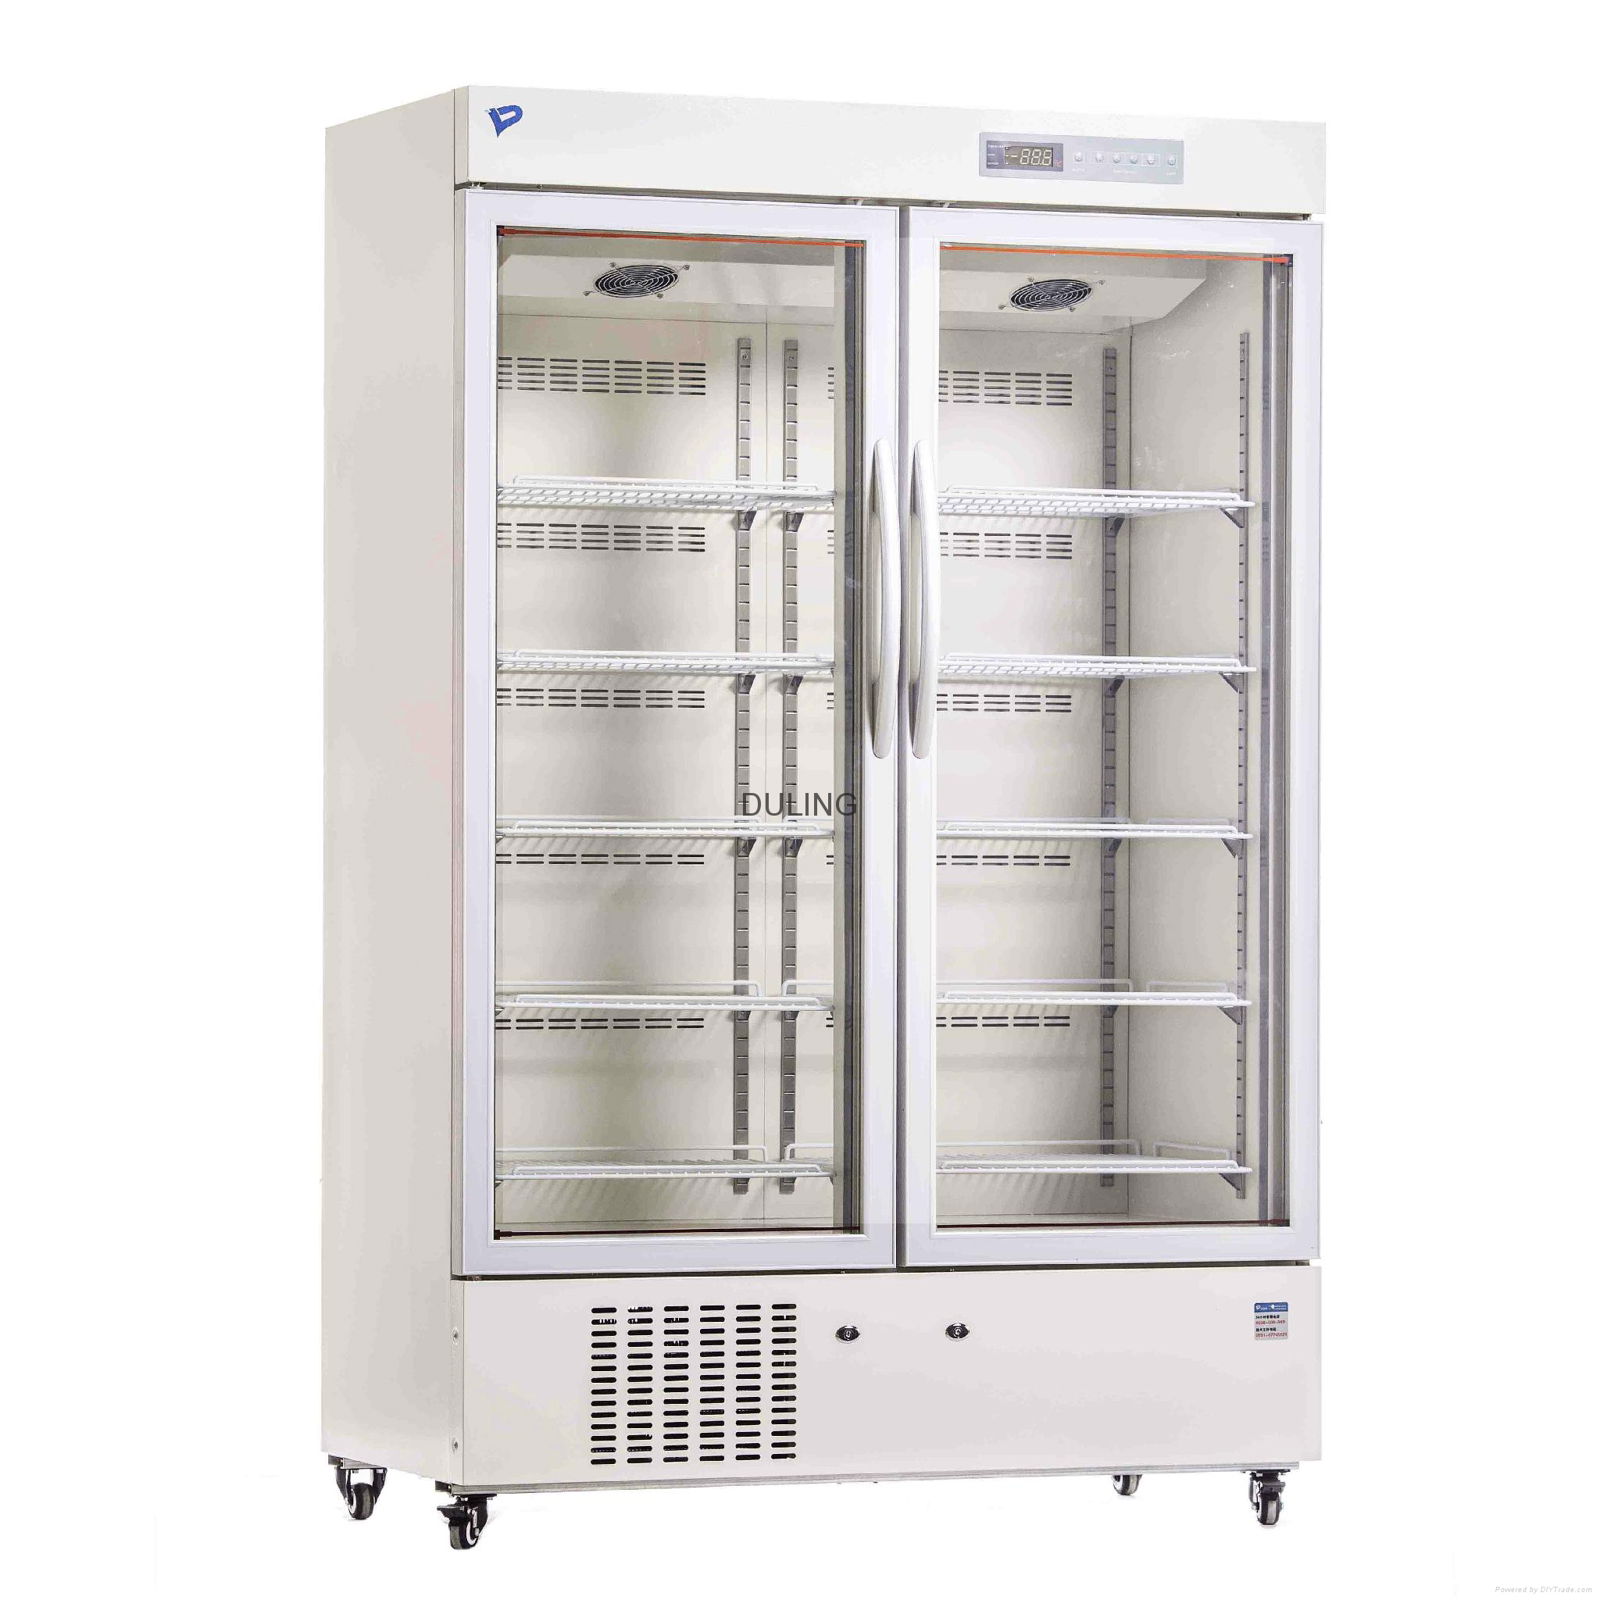 Medical/Vaccine refrigerator